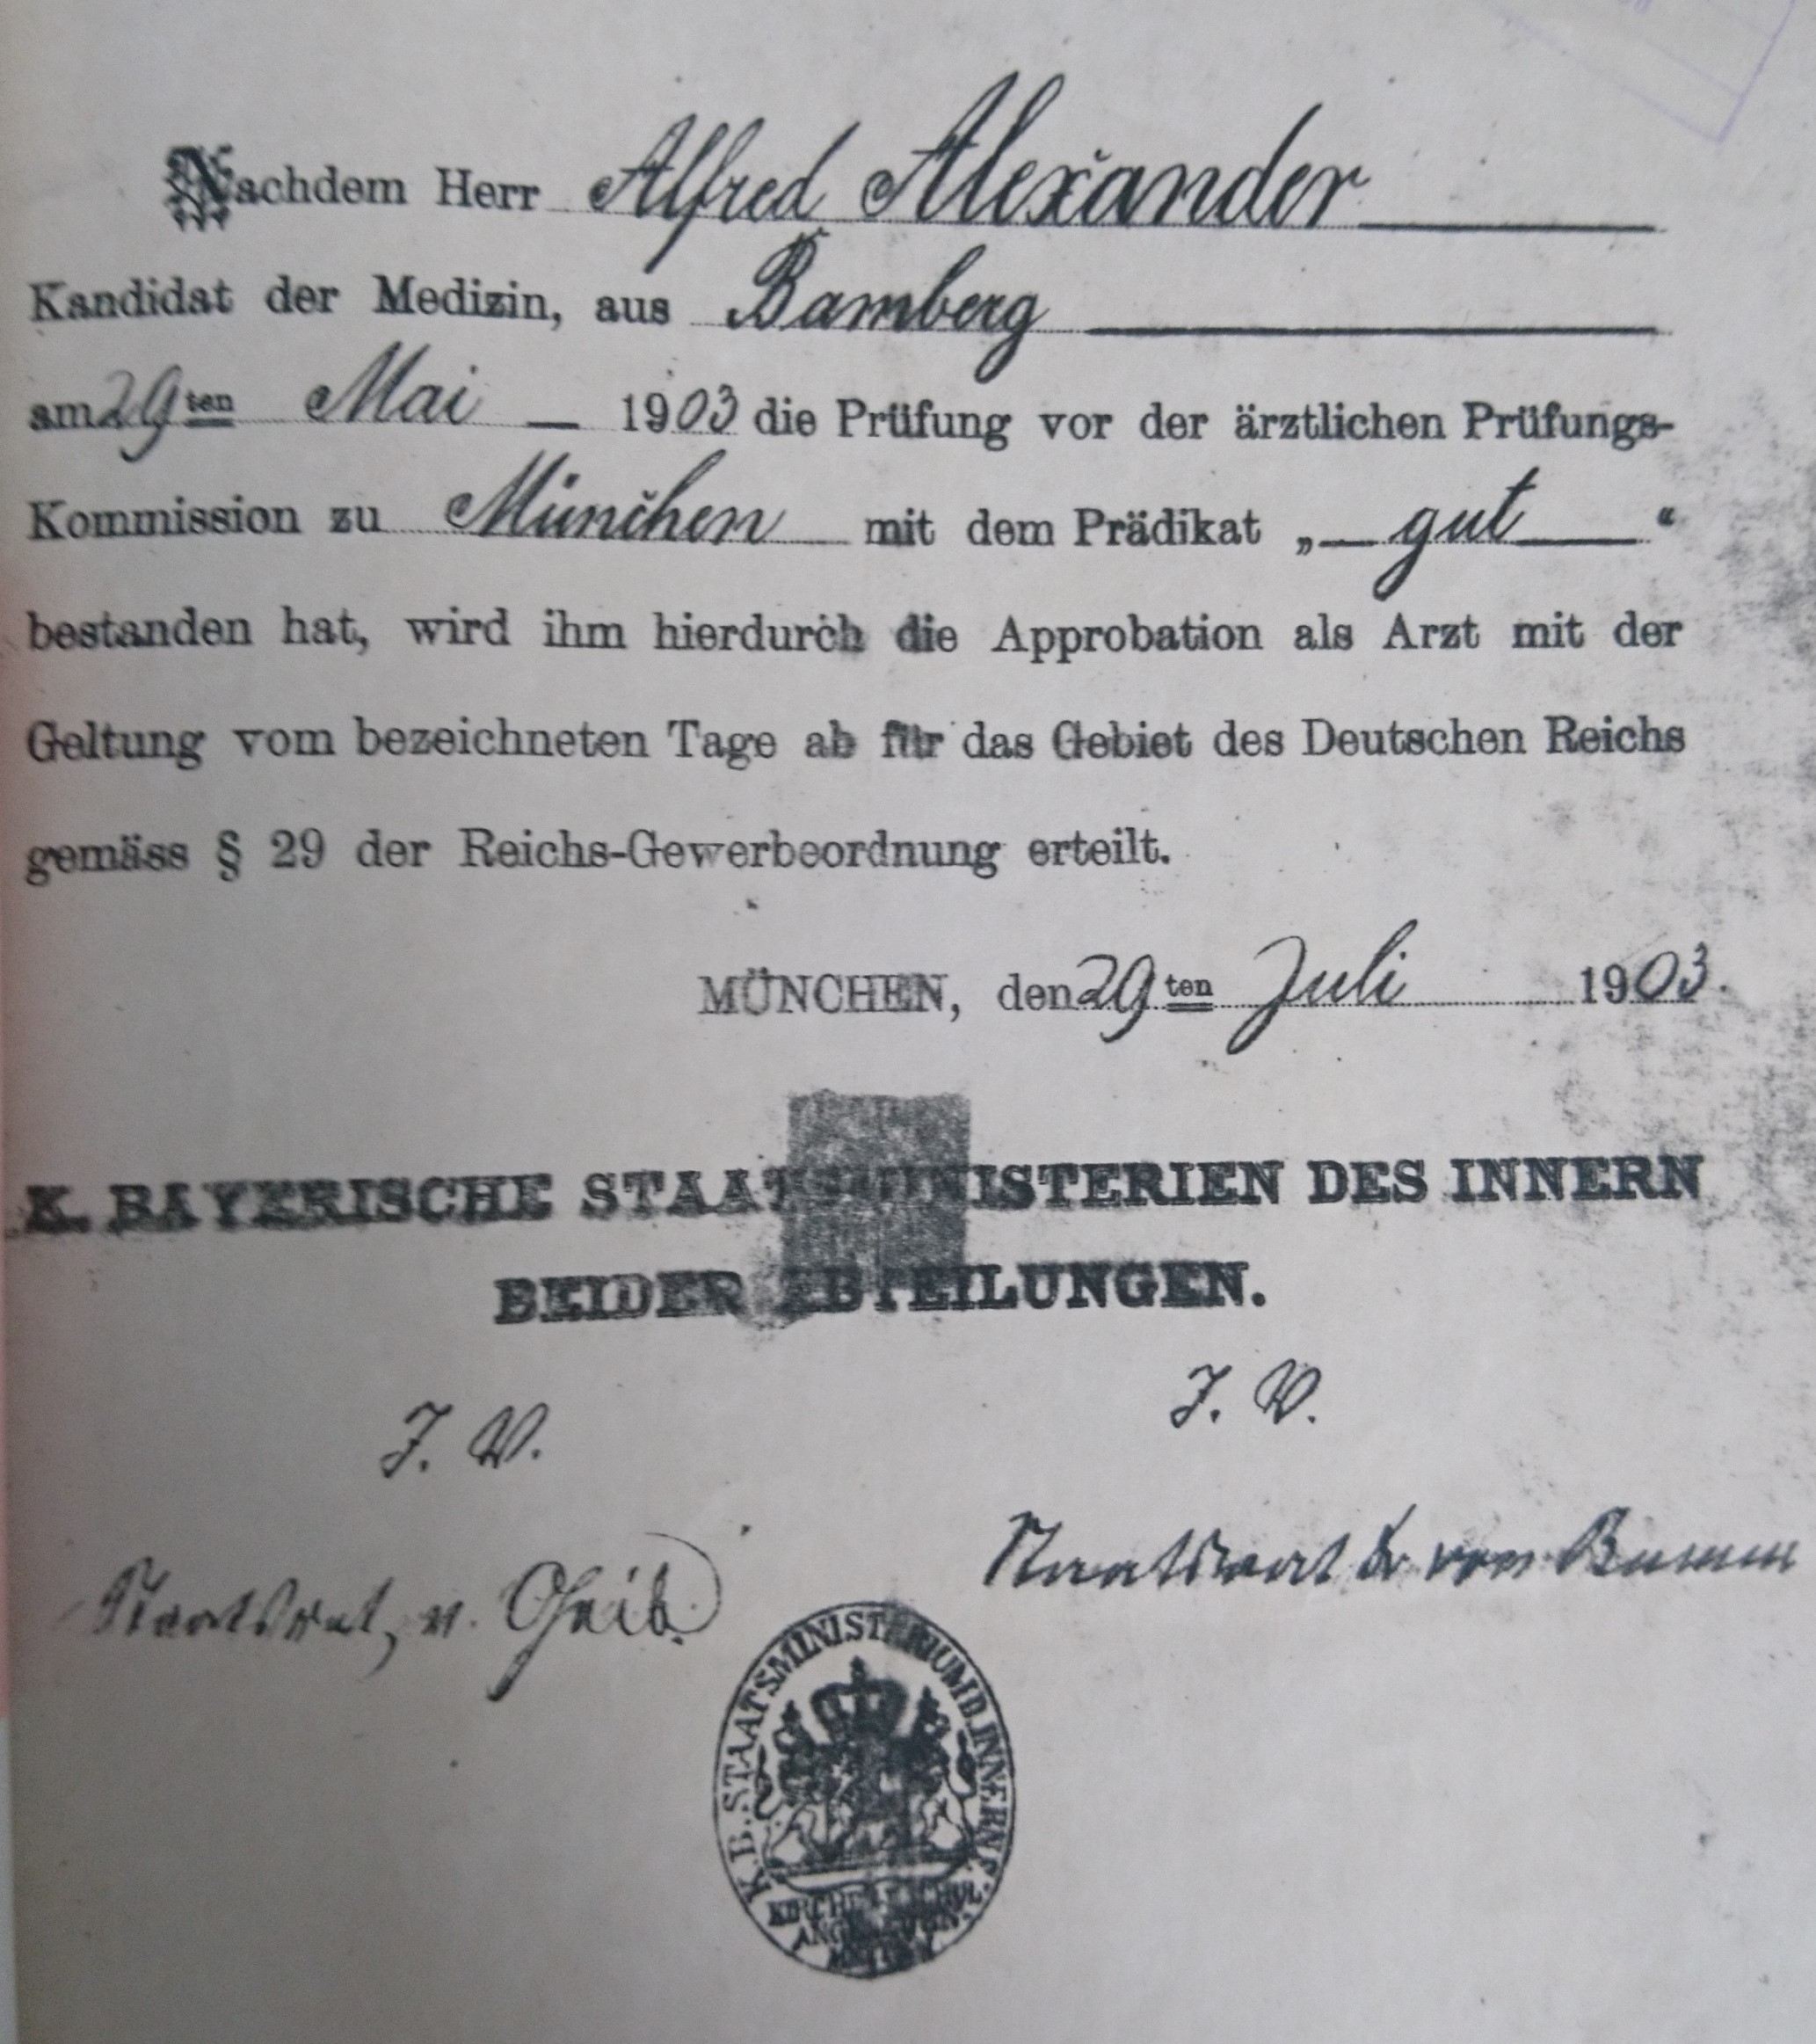 Certificate of Approbation 1903, image source Entschädigungsbehörde (Compensation Authority) Berlin